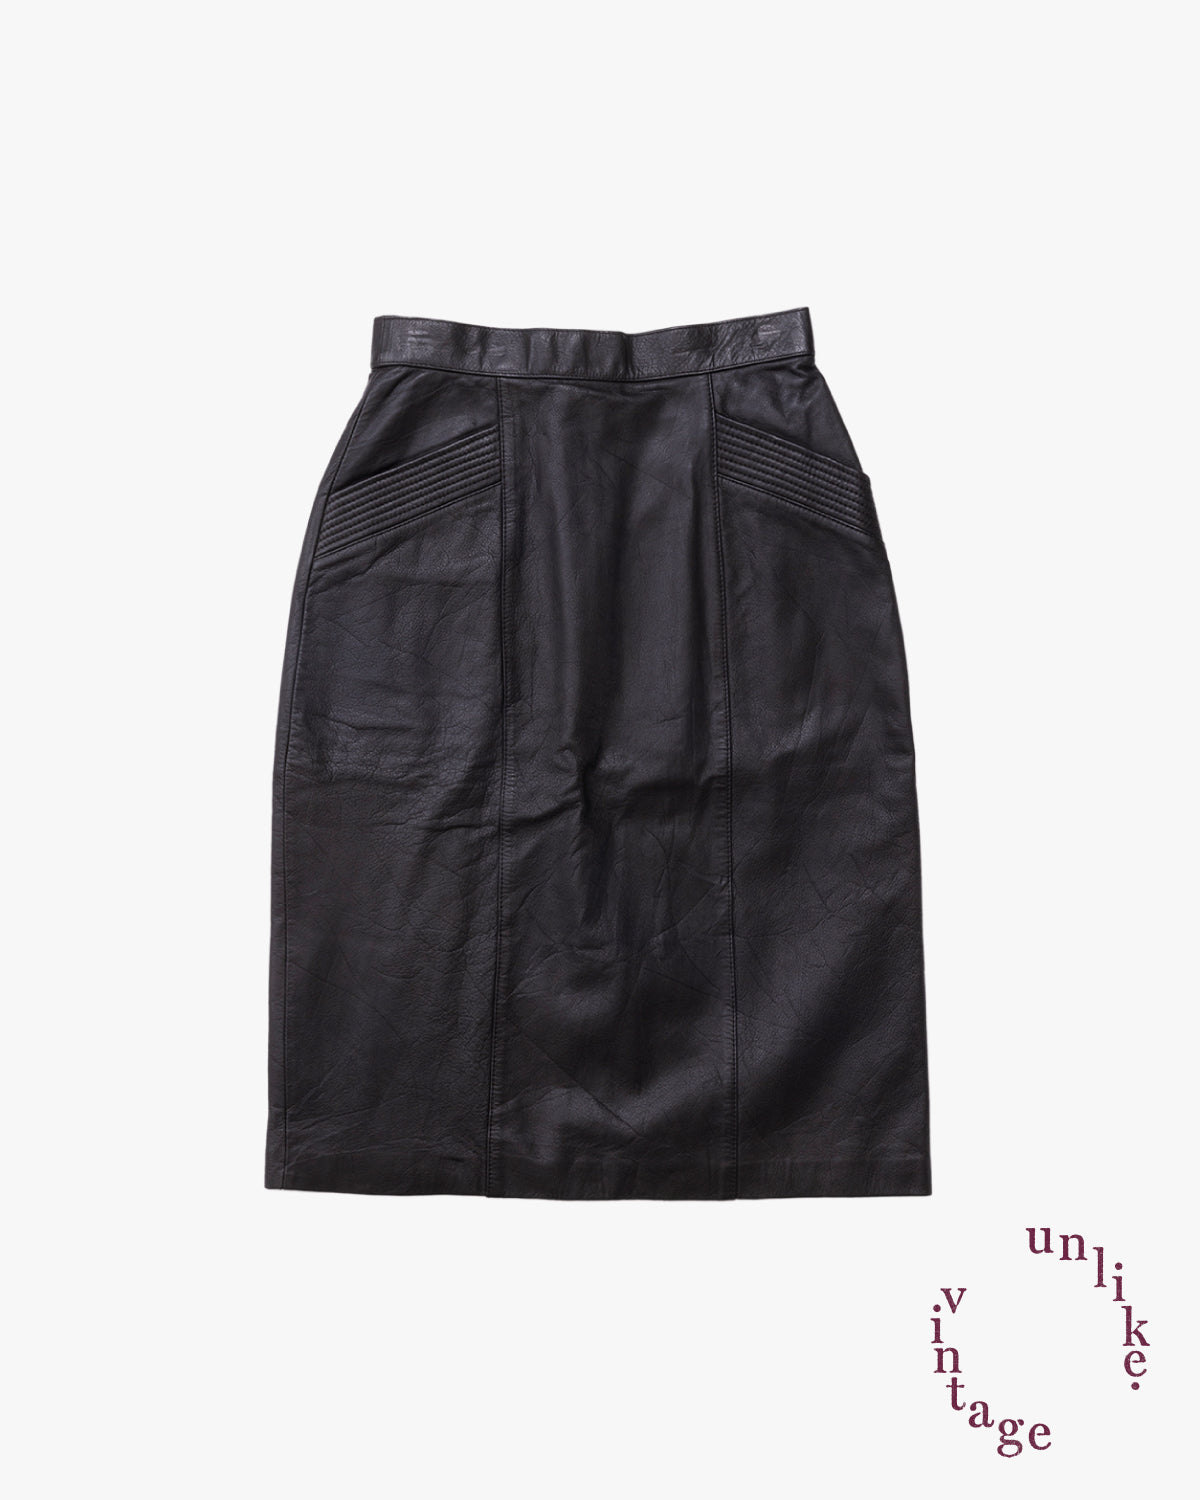 Leather Skirt #8 / Black